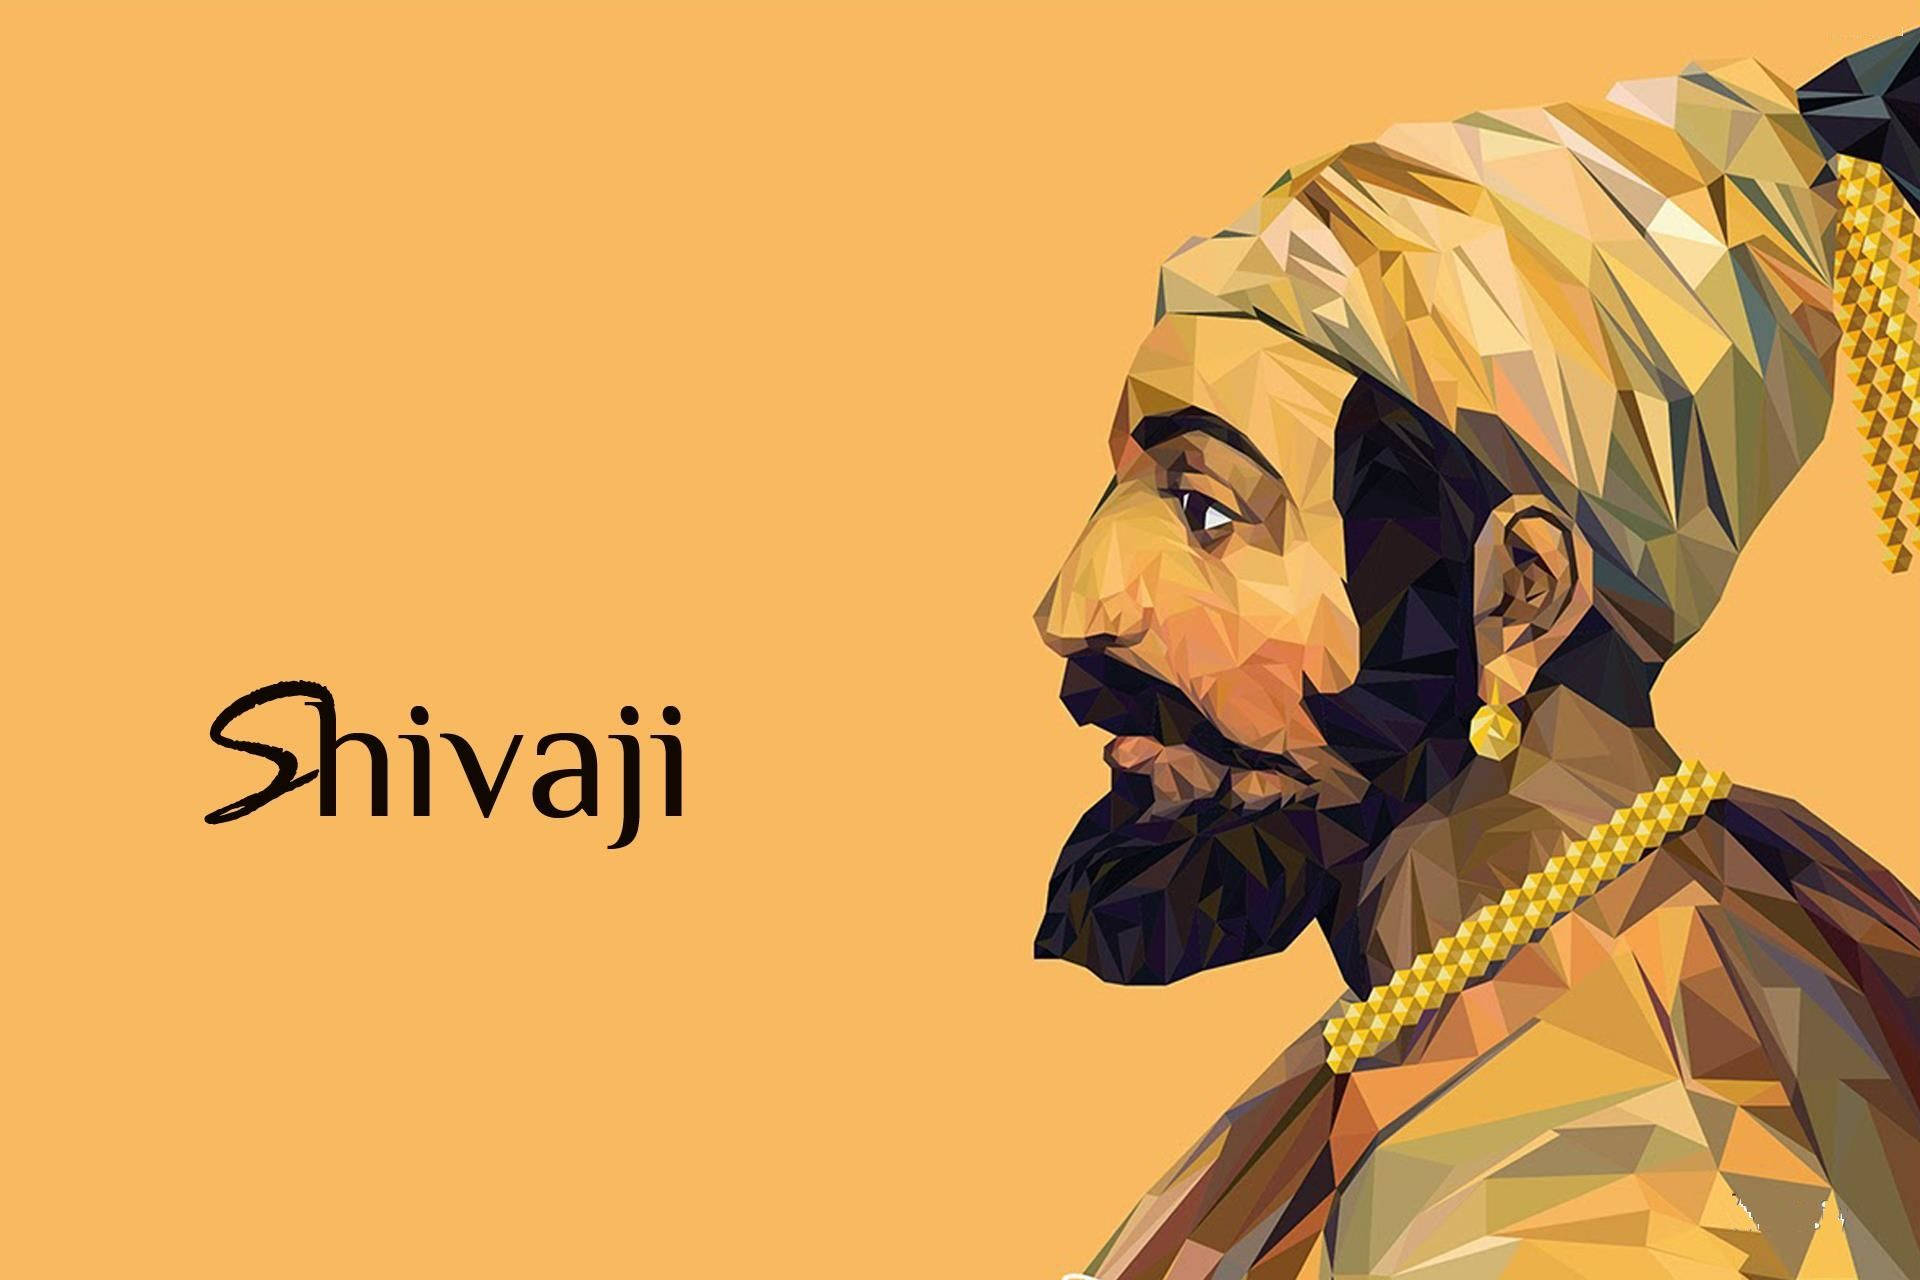 Maratha King Shivaji Maharaj Face With Dark Background HD Wallpaper